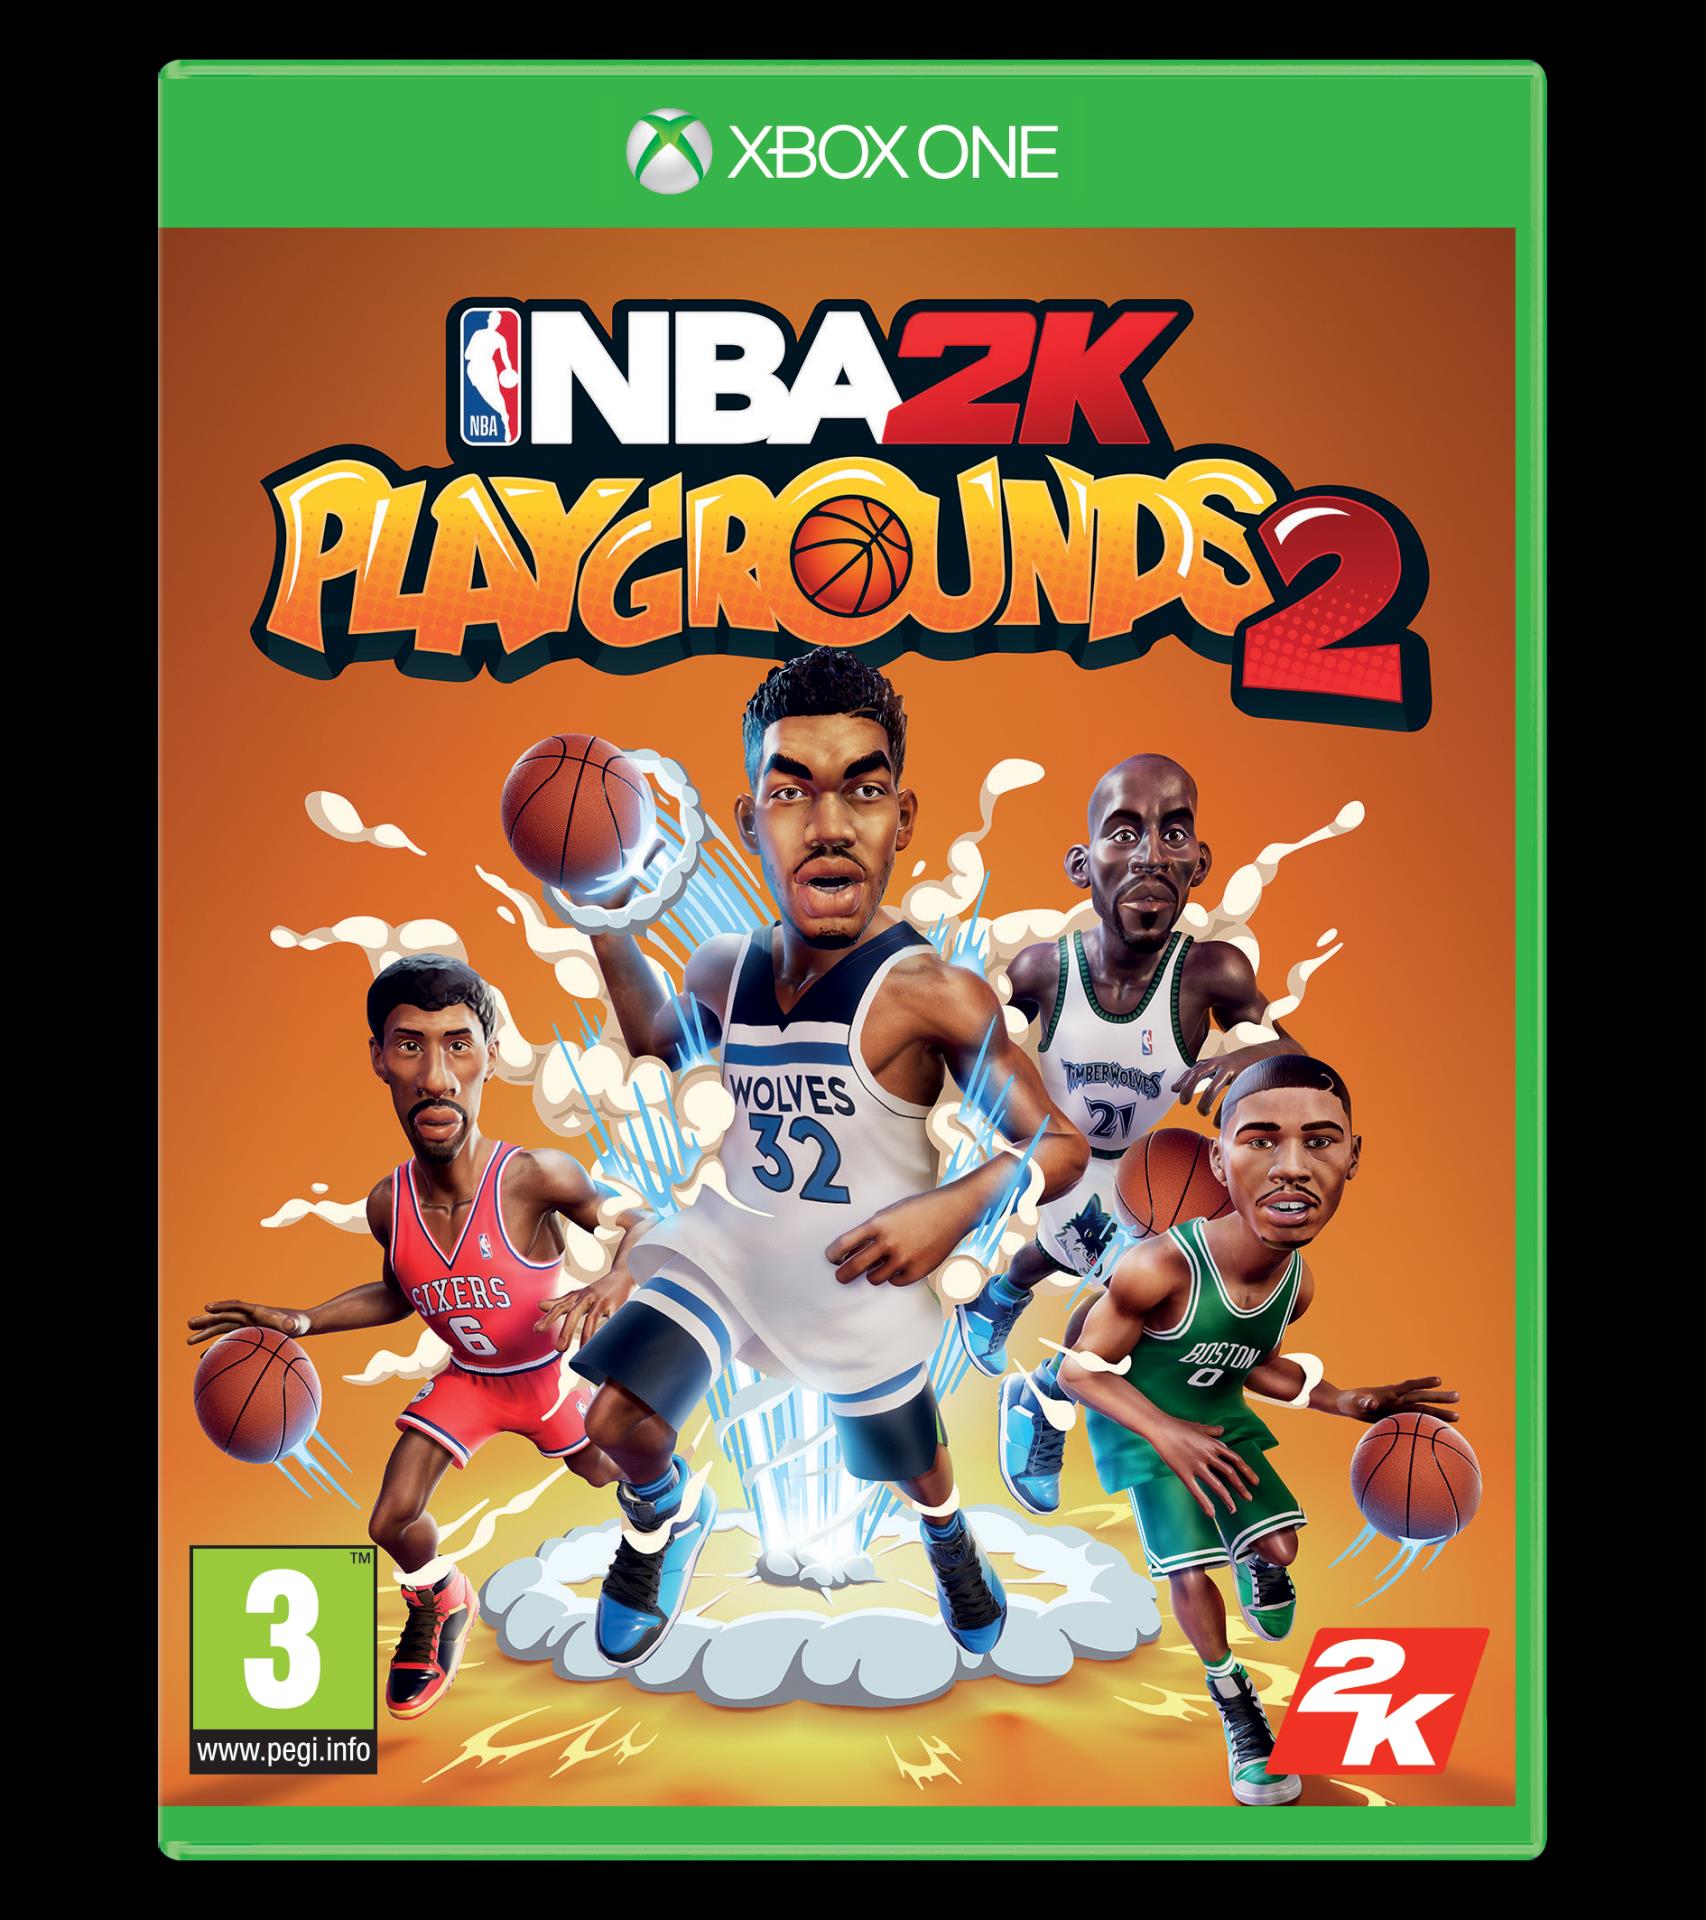 Â NBA 2K Playgrounds 2 - Xbox one